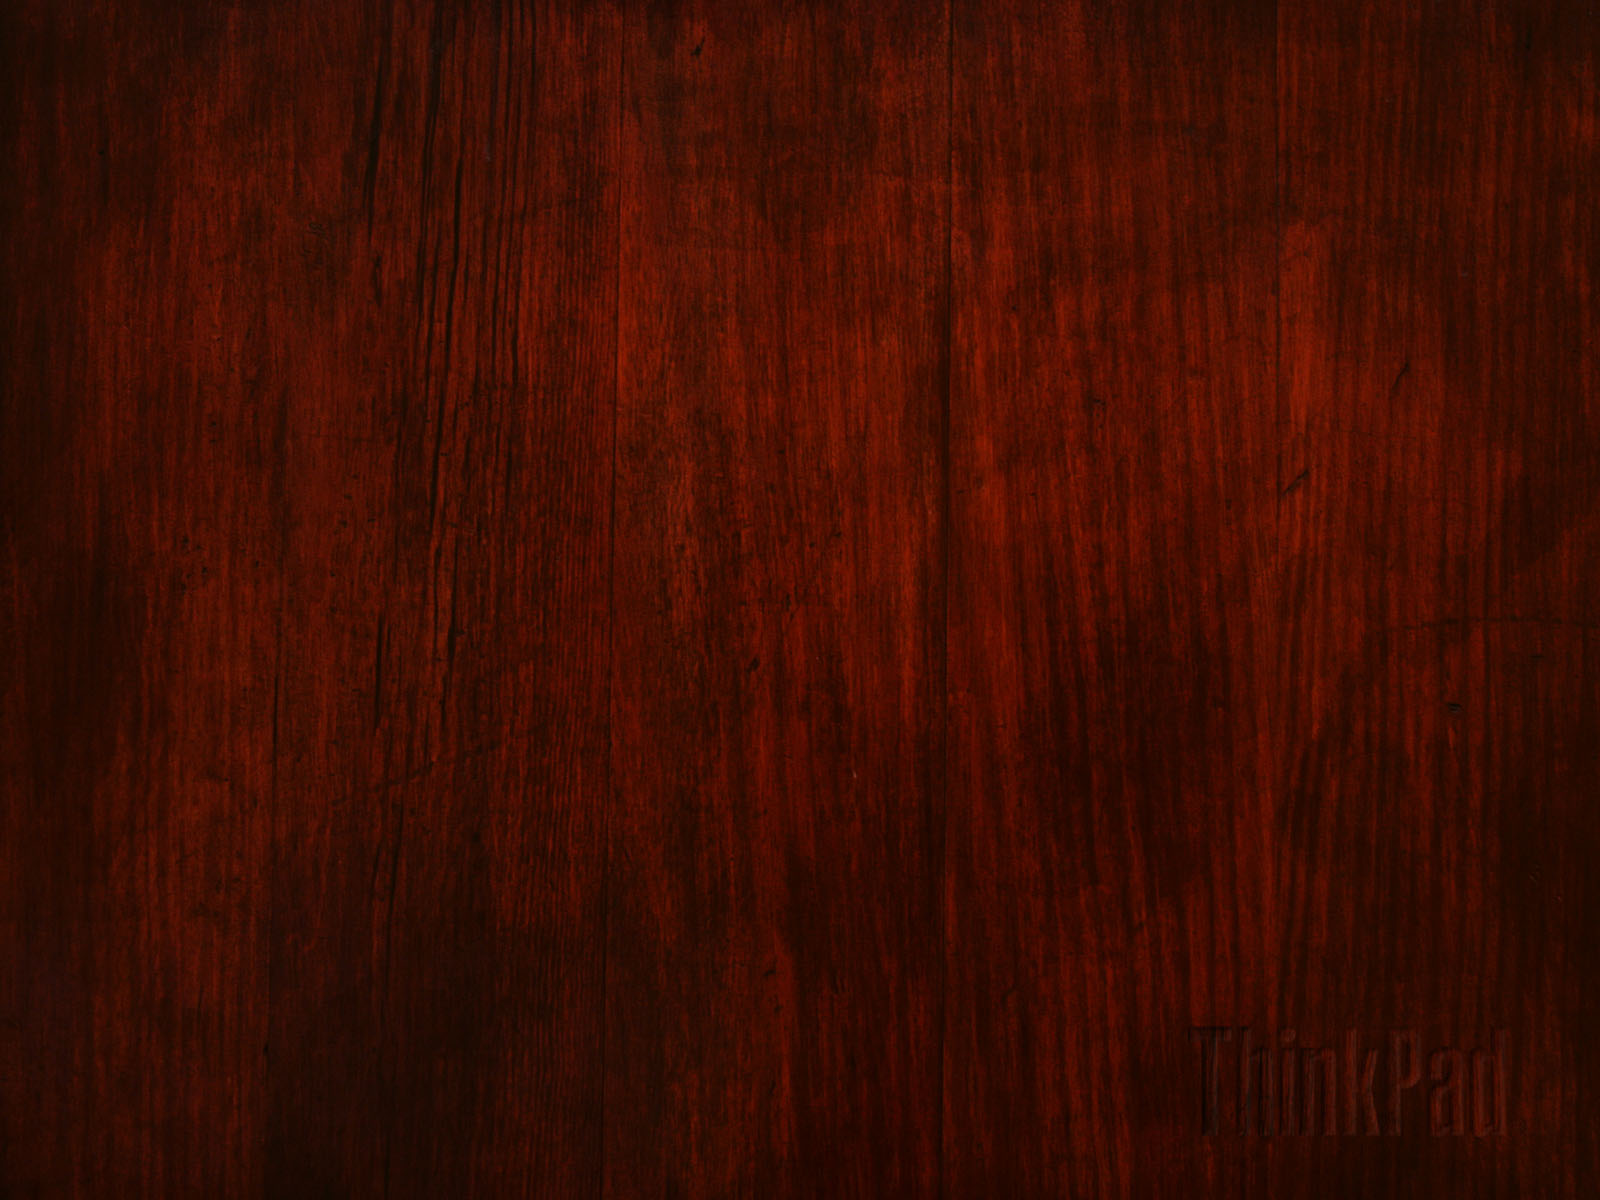 Wood Is A Brown American Hardwood That Has Hint Of Pink Or Dark